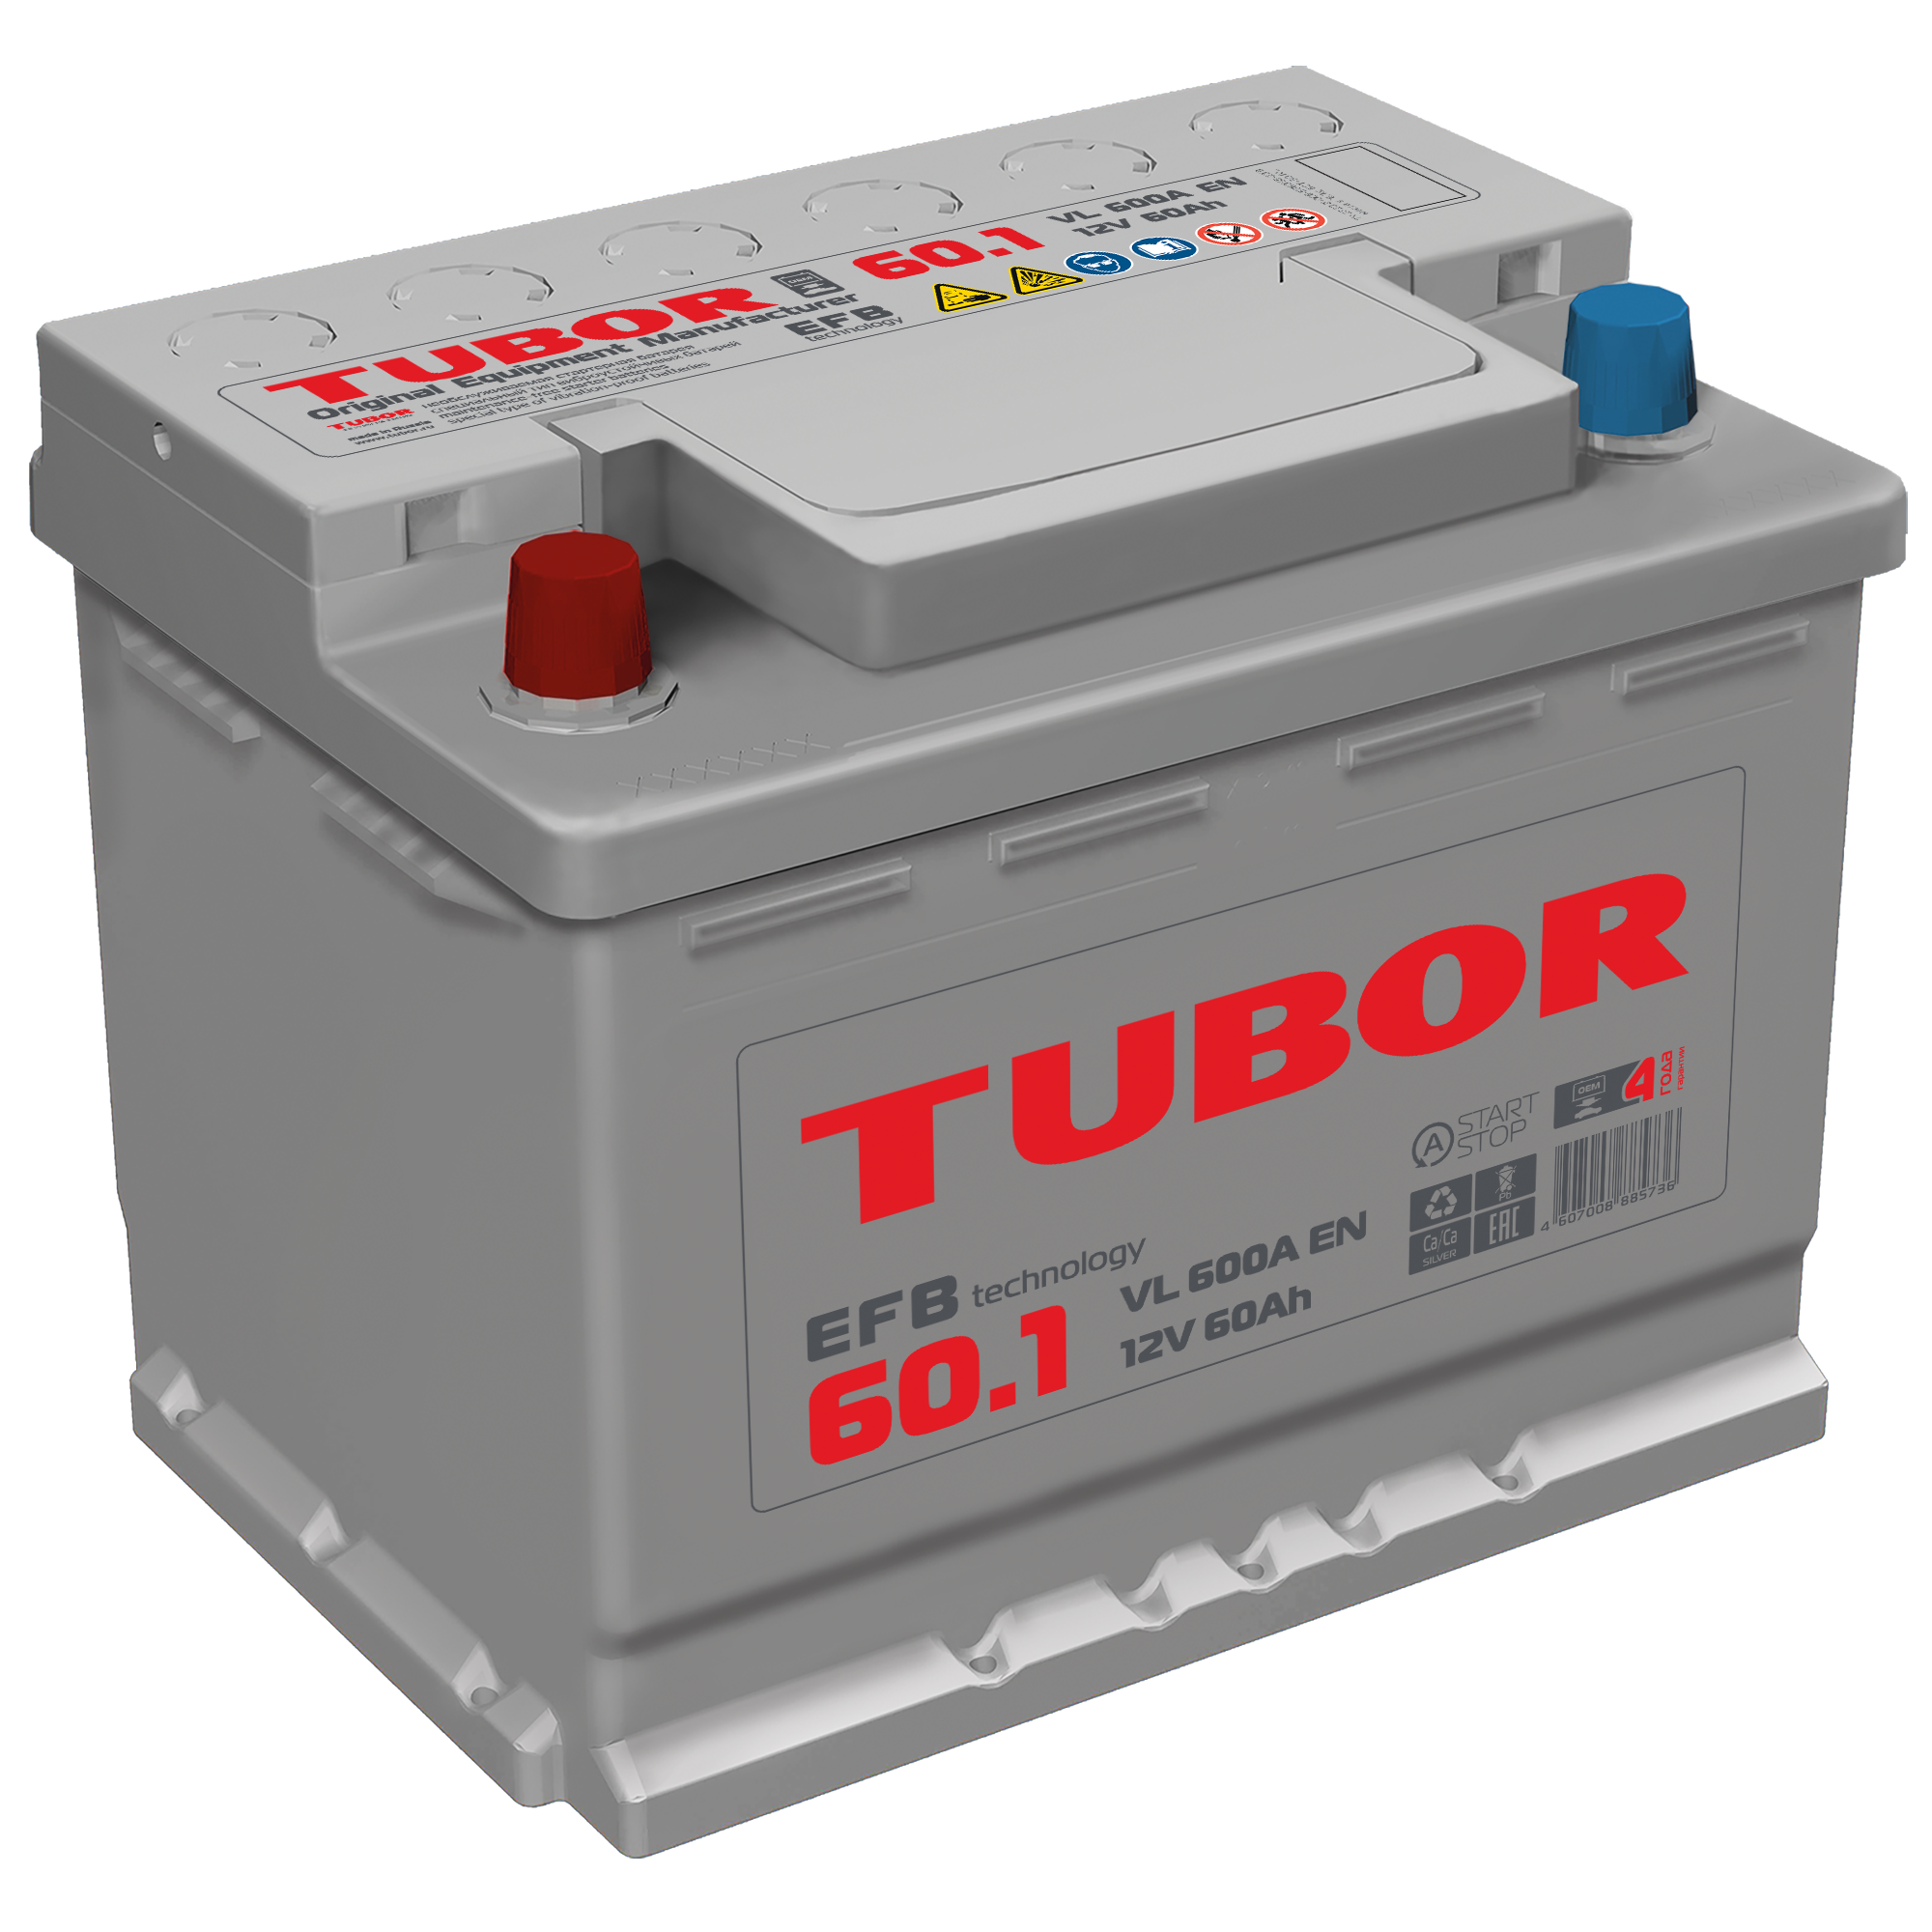 Ч 600 п. Аккумулятор Tubor EFB 75 Ач. Аккумулятор Титан 75 EFB. Tubor EFB 60. Батарея аккумуляторная Tubor EFB 6ст-75.0 VL 4607008885743 Tubor.